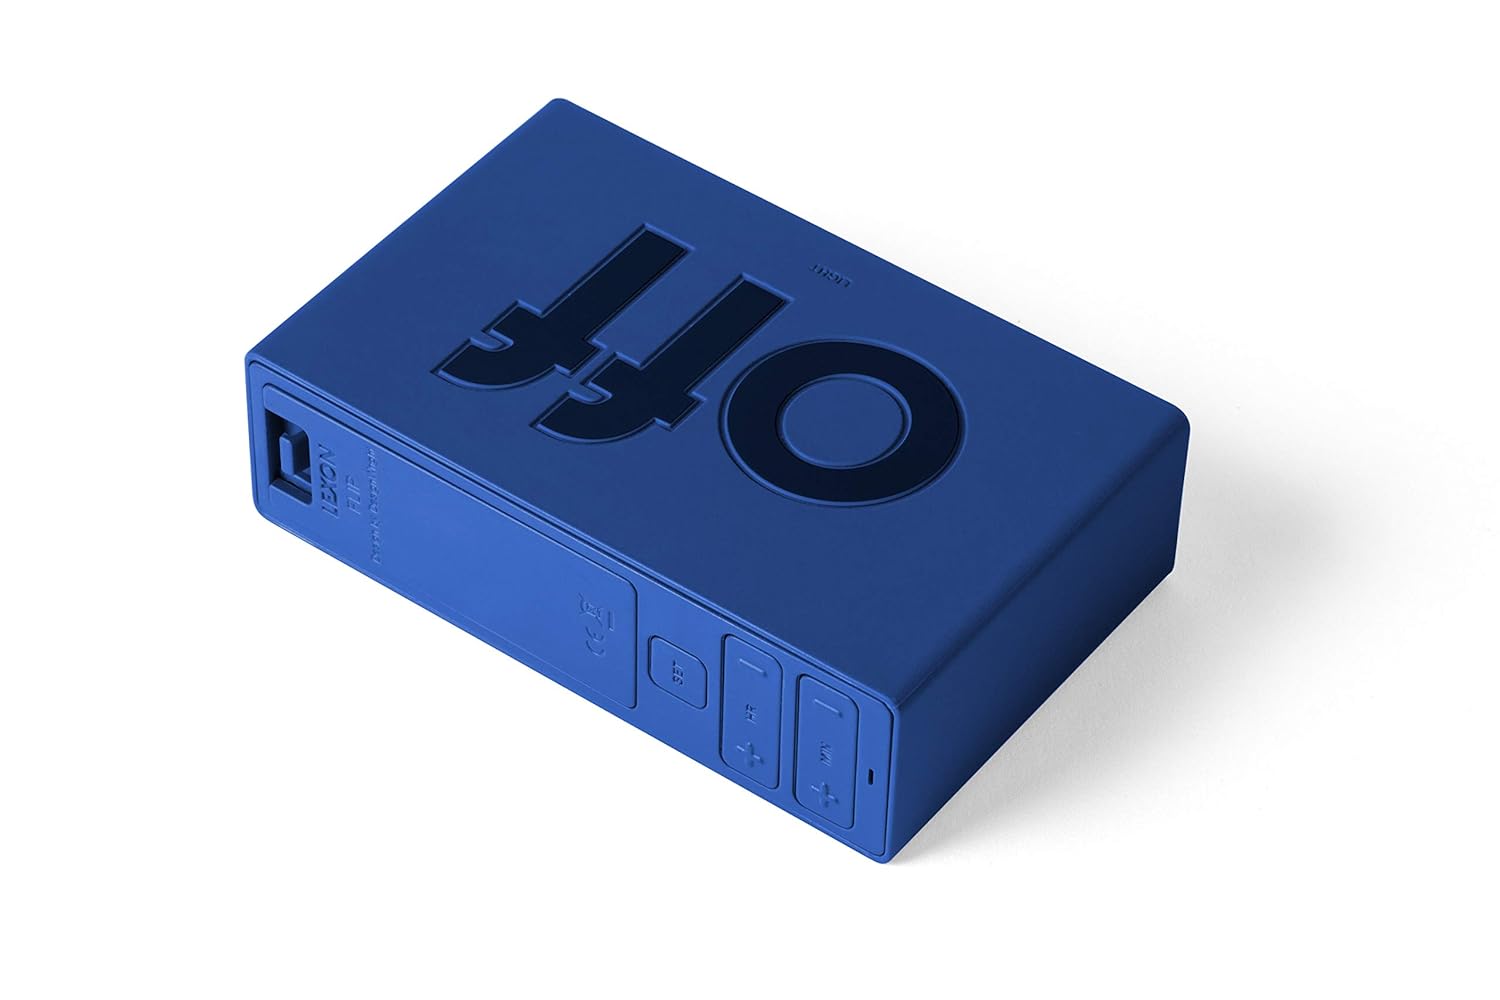 LEXON - FLIP+ Reversible LCD Alarm Clock Radio Controlled - Dark Blue